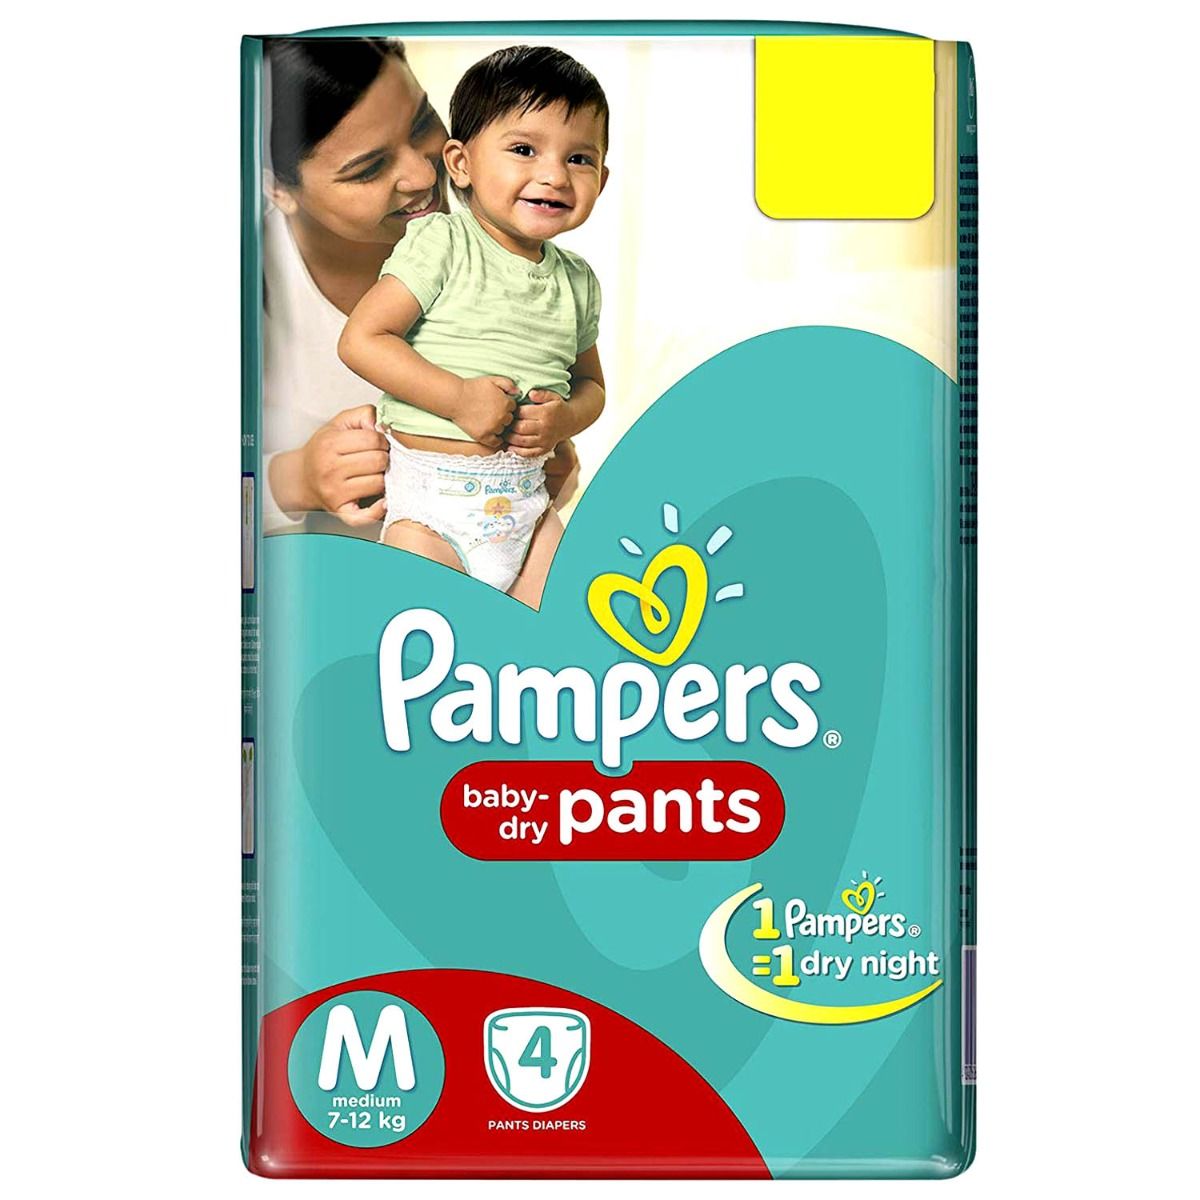 Buy Pampers Baby-Dry Diaper Pants Medium, 4 Count Online